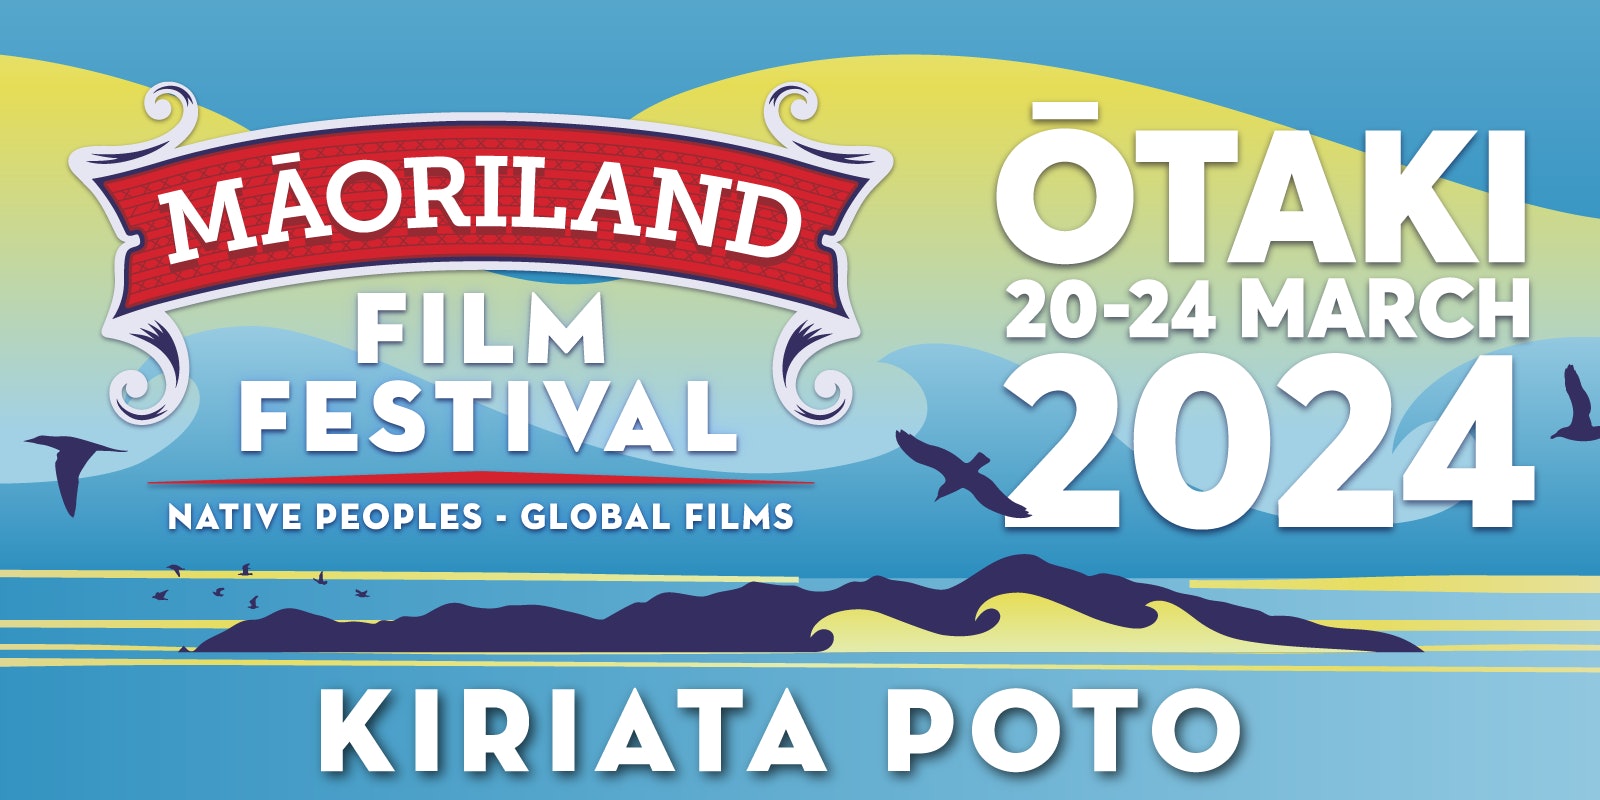 MAORILAND FILM FESTIVAL 2024 | Kiriata Poto